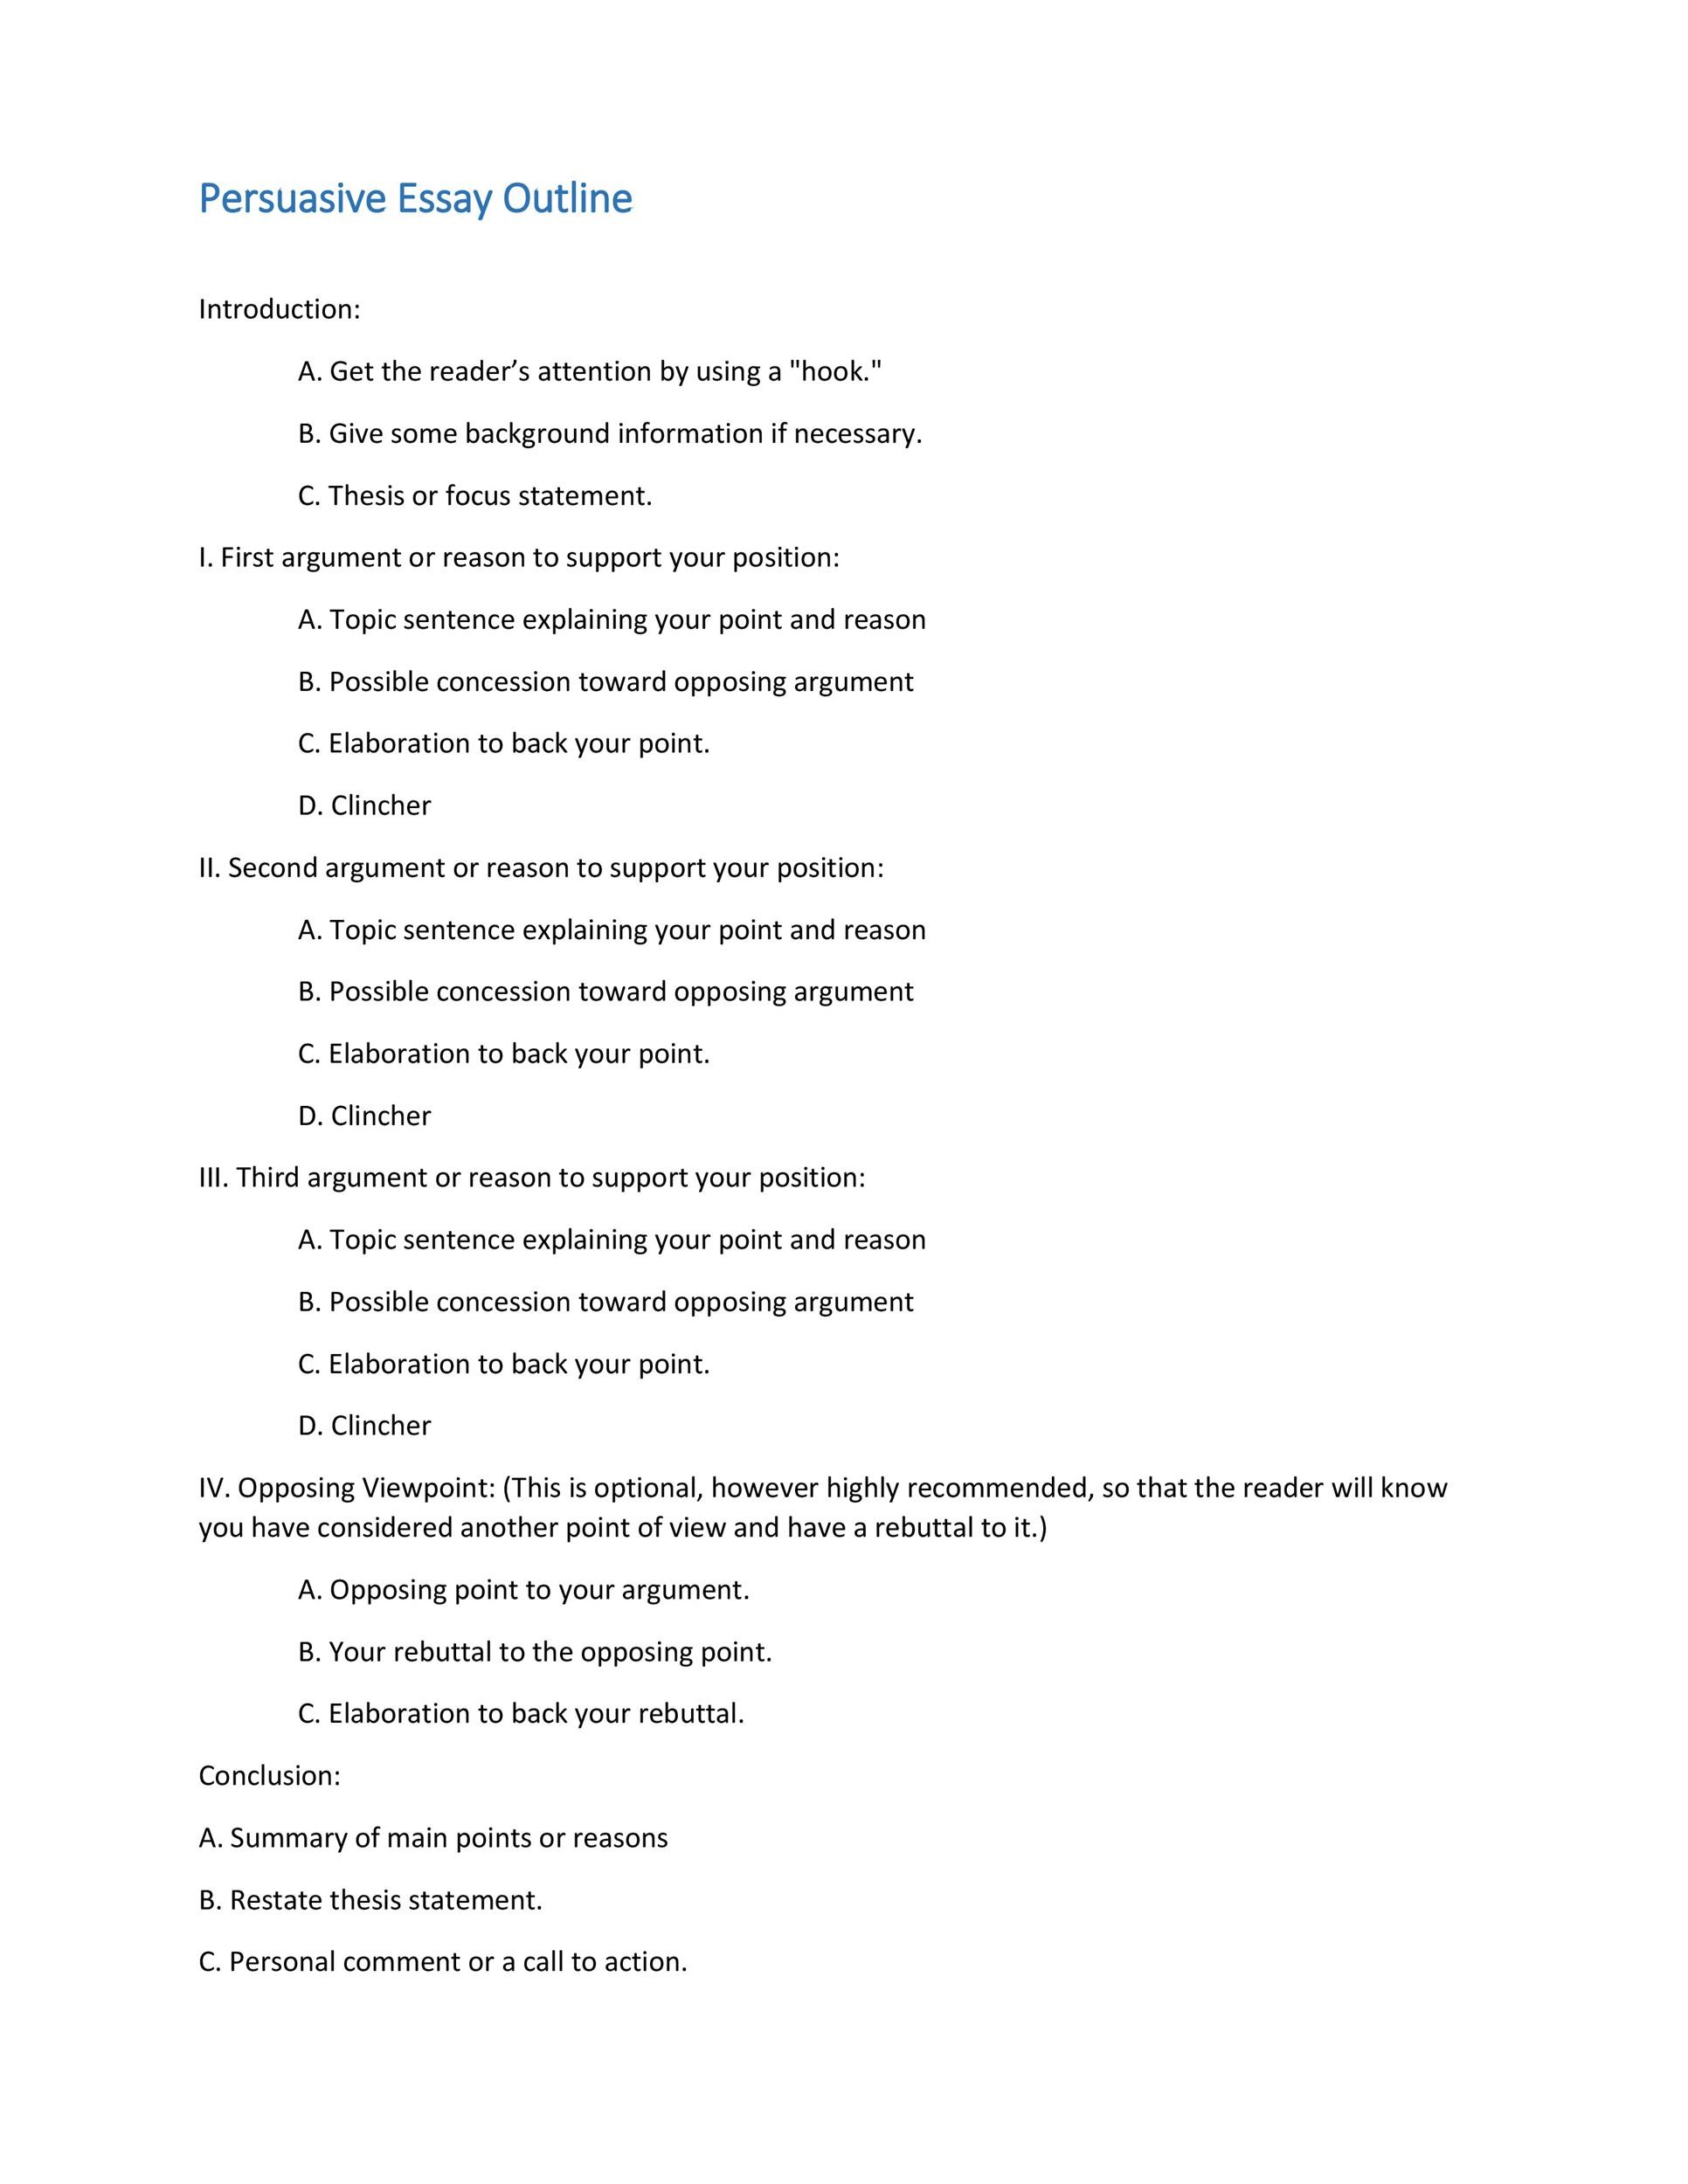 Sample outline for persuasive essay